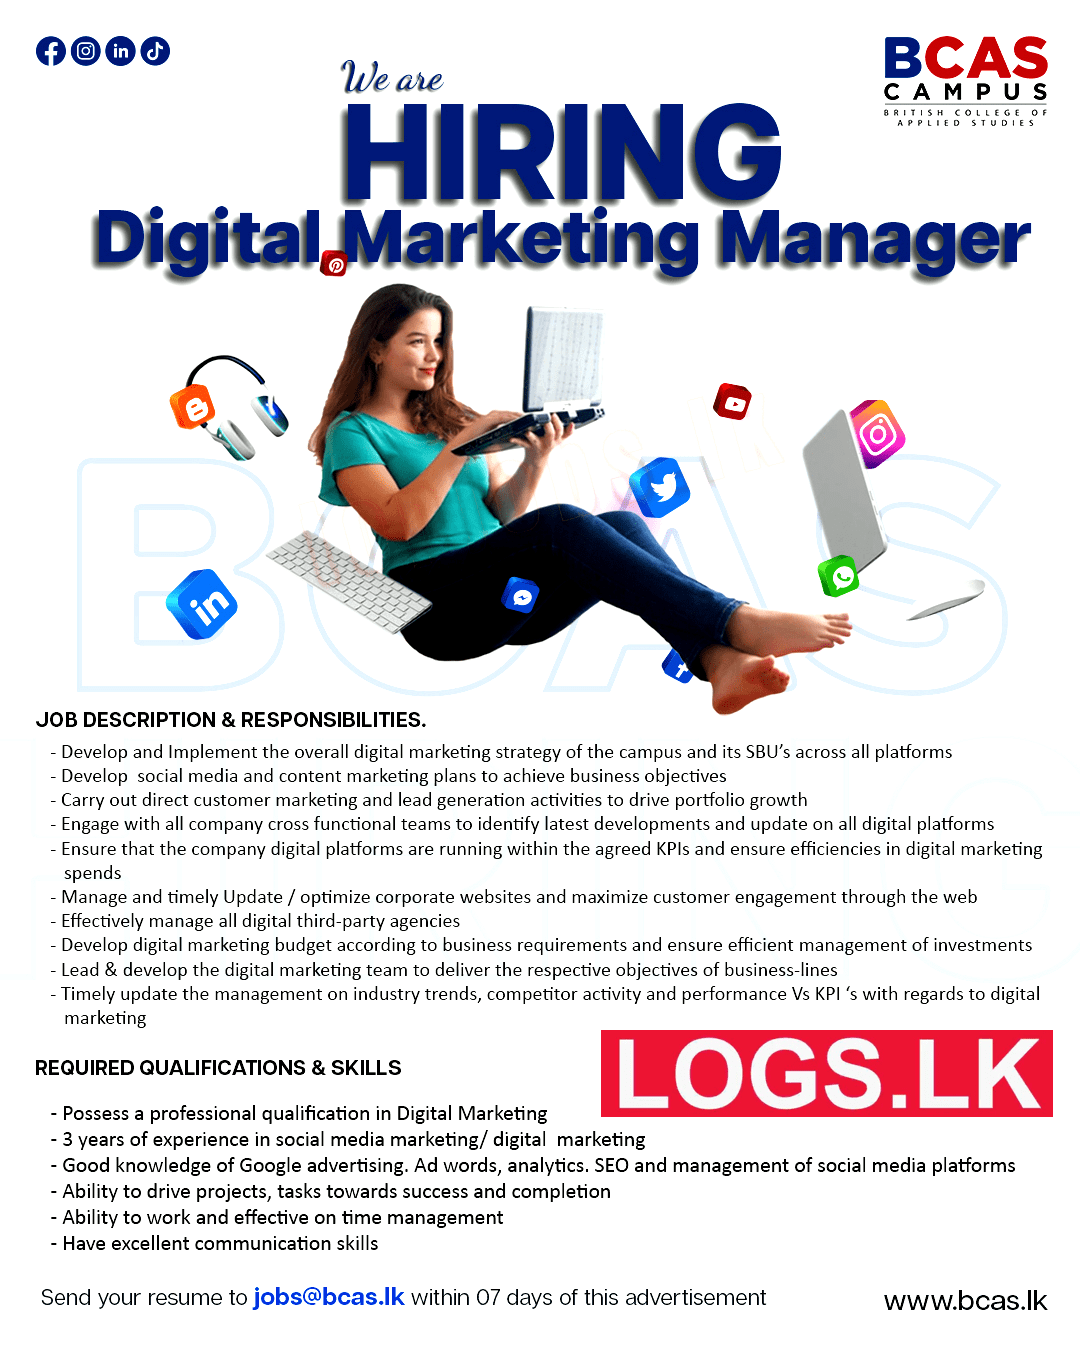 Digital Marketing Manager Job Vacancy in ICBT Campus Jobs Vacancies Details, Application Form Download